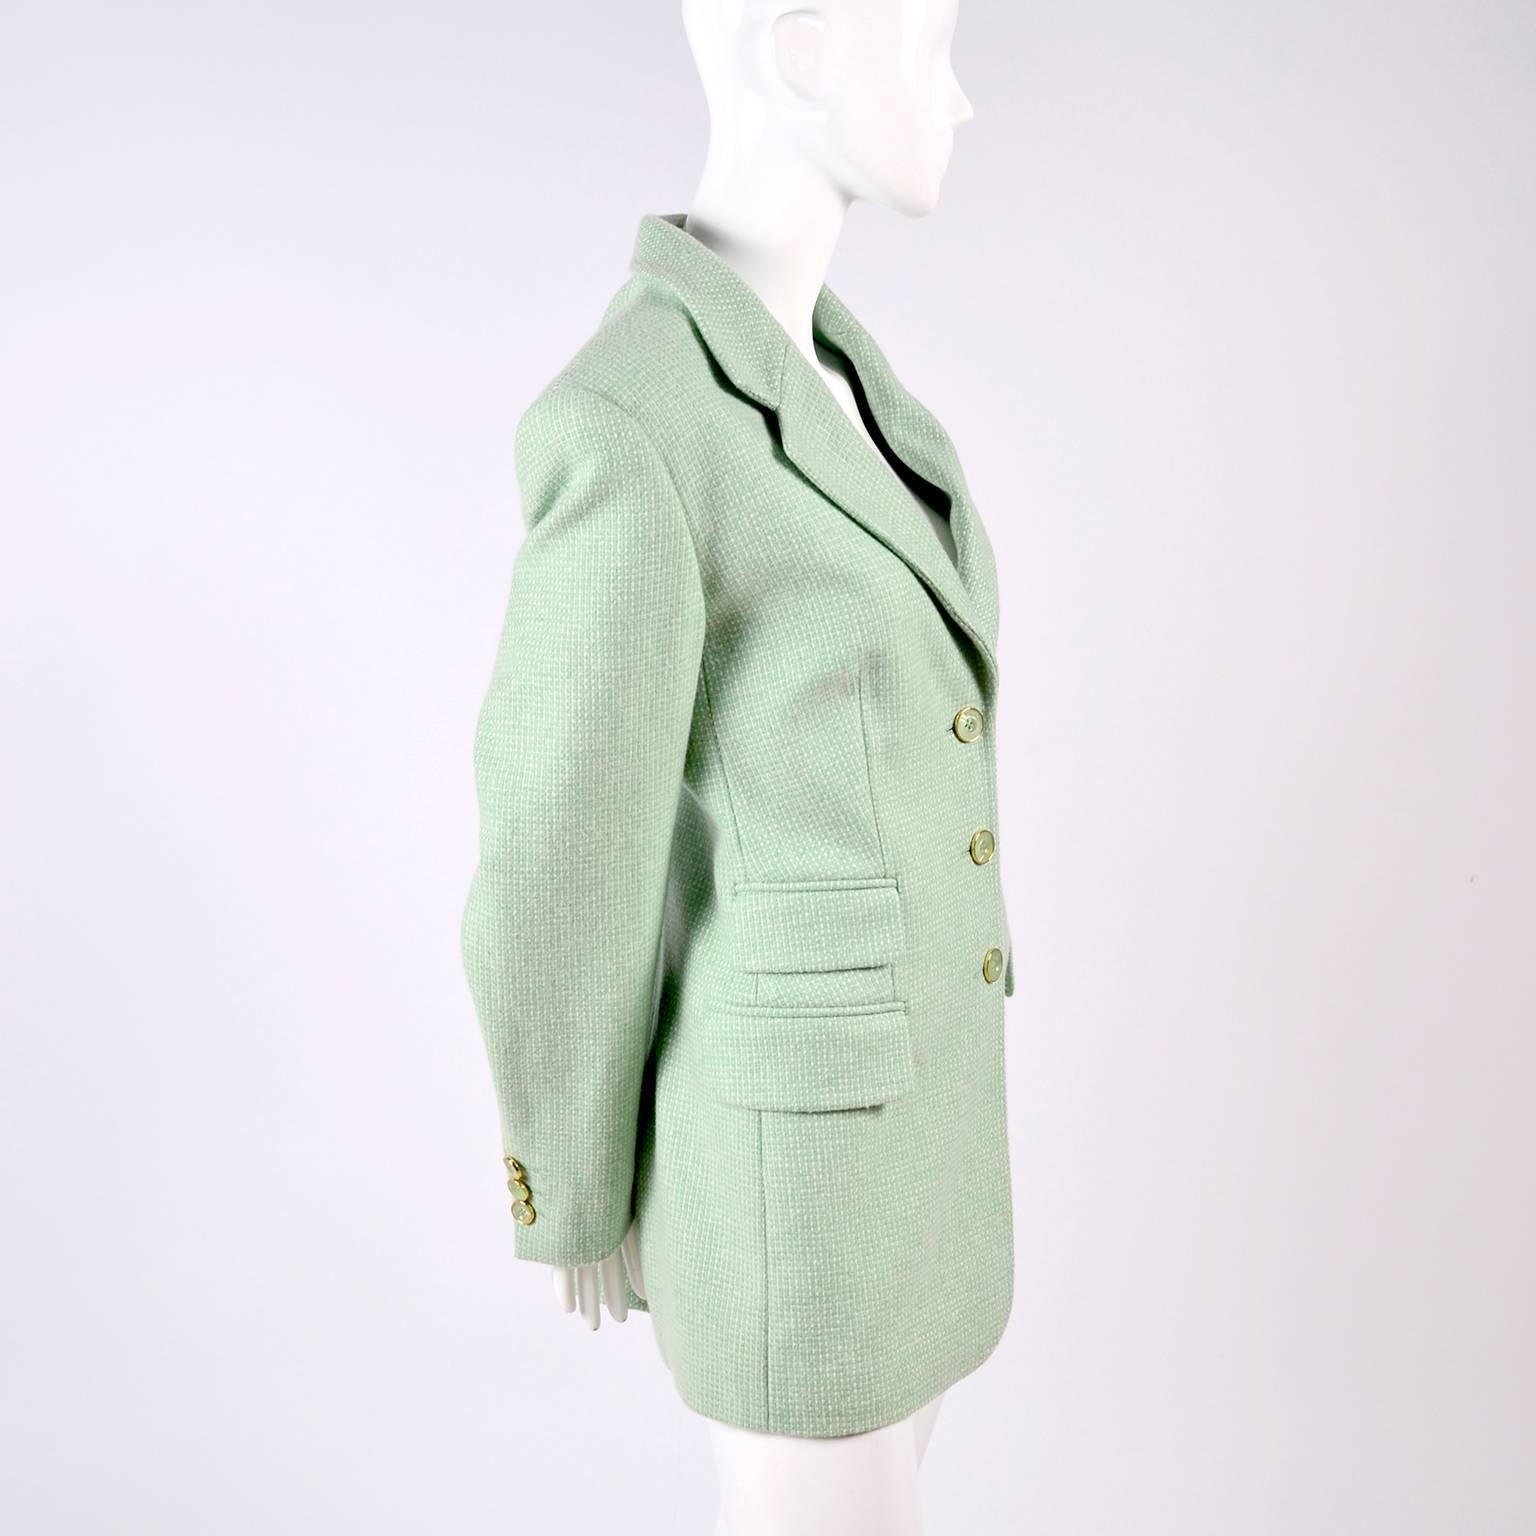 Escada Margaretha Ley Green Cashmere Blazer Jacket in Size 8 For Sale 1